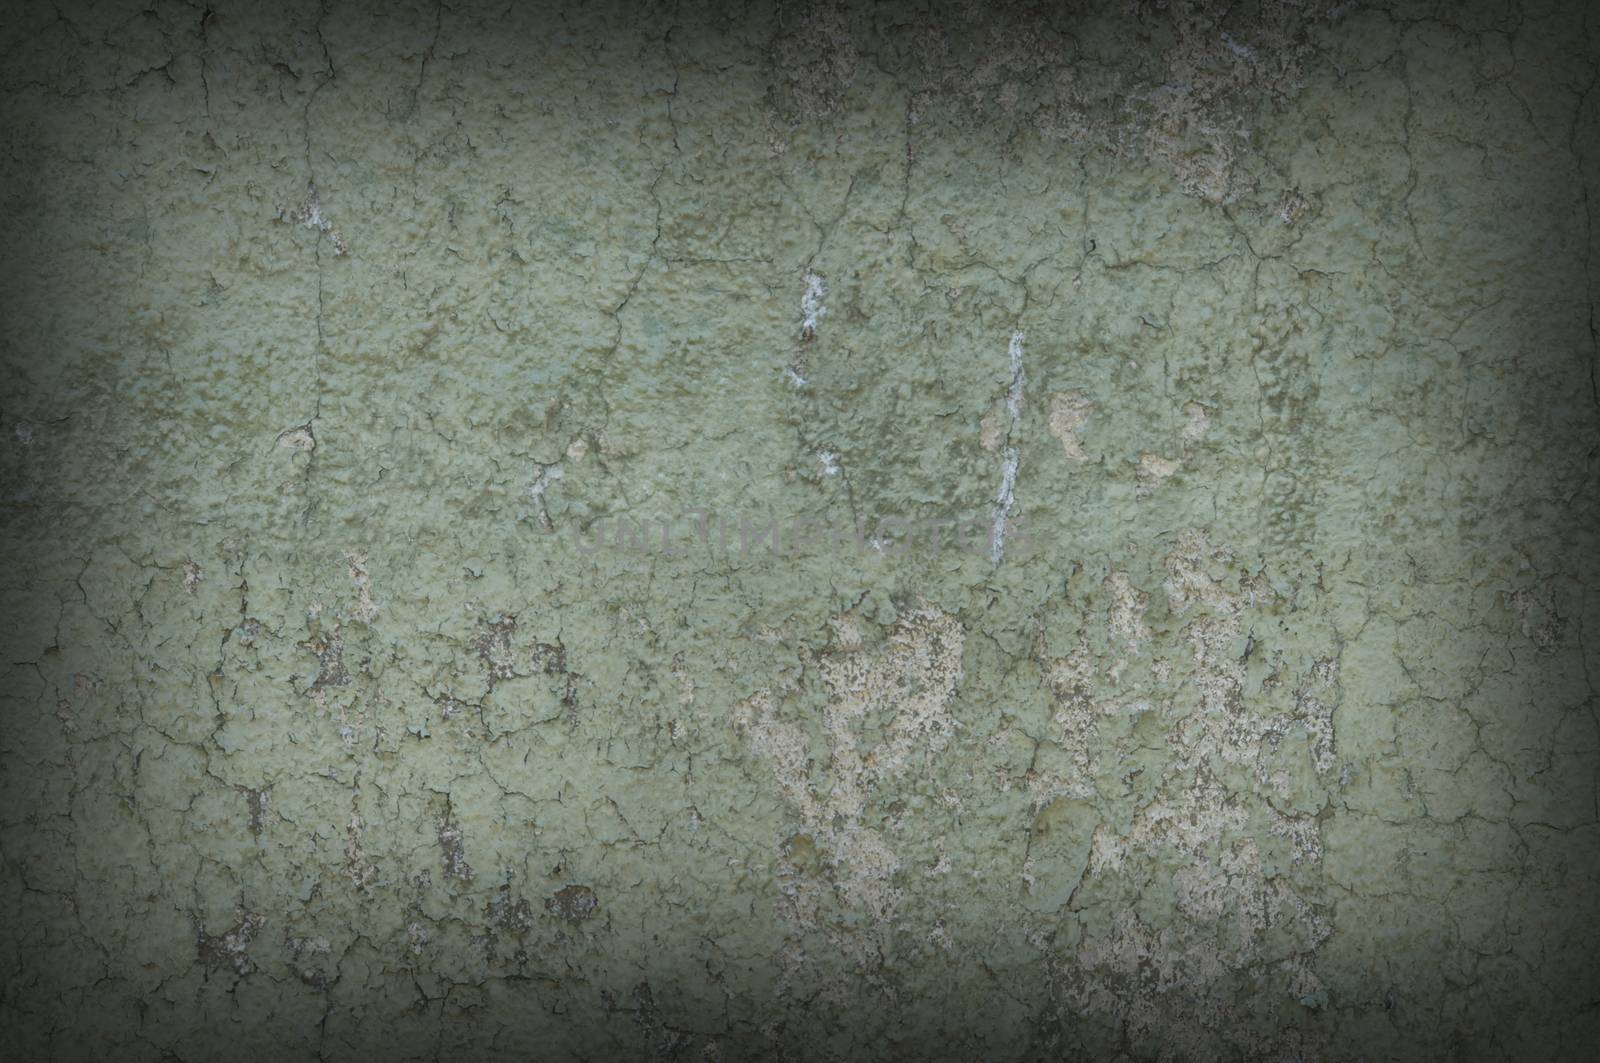 Grayish green weathered and distressed textured wall, dark around the edges